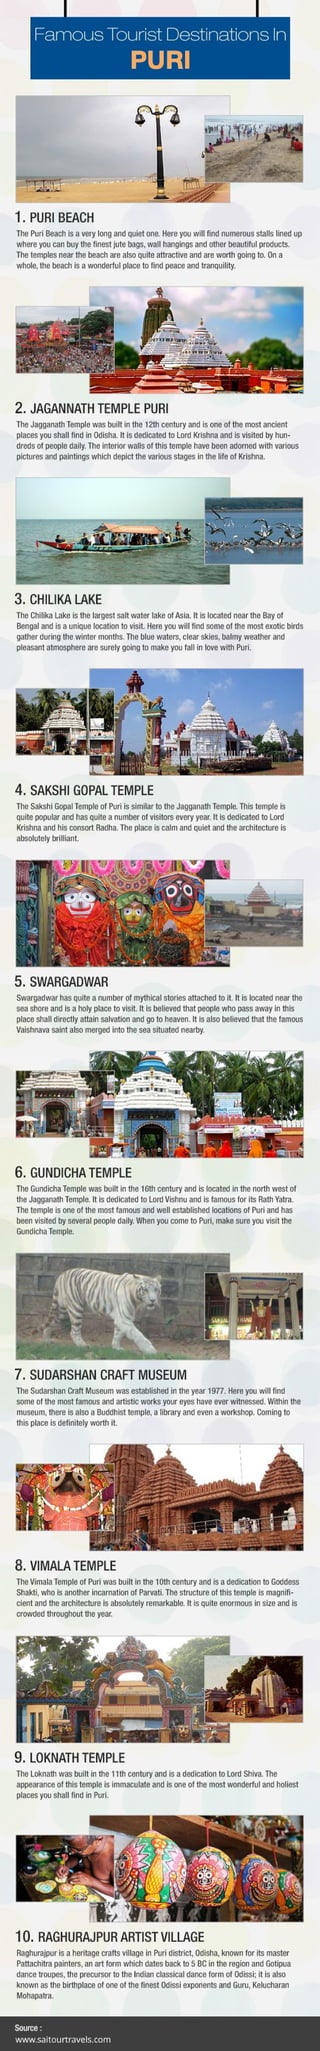 Top 10 Tourist Destinations in Puri